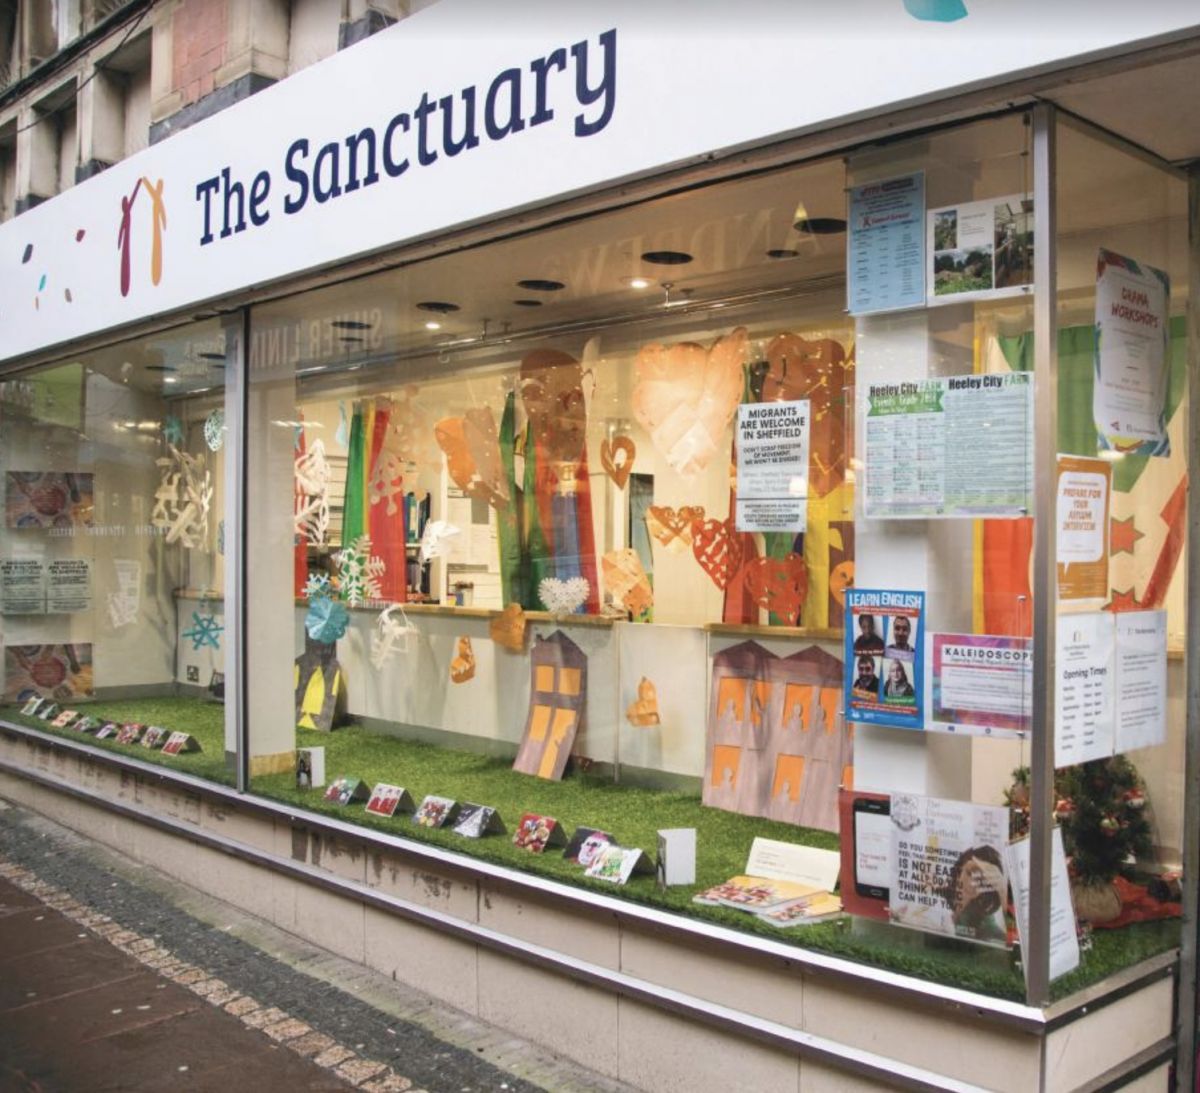 City of Sanctuary Sheffield